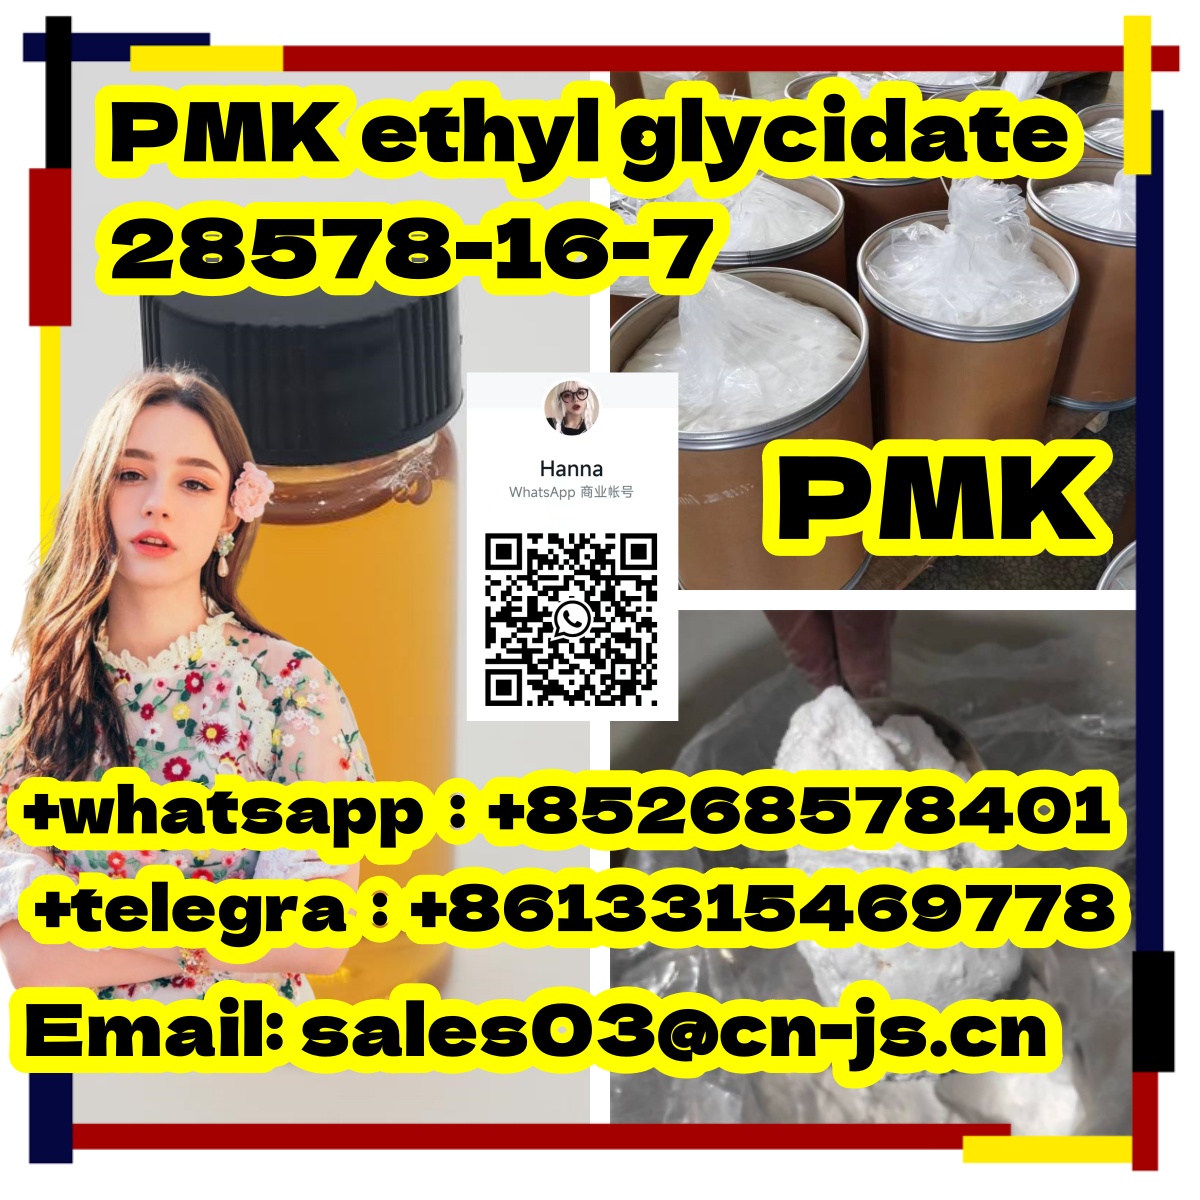 Cheap PMK ethyl glycidate 28578-16-7 